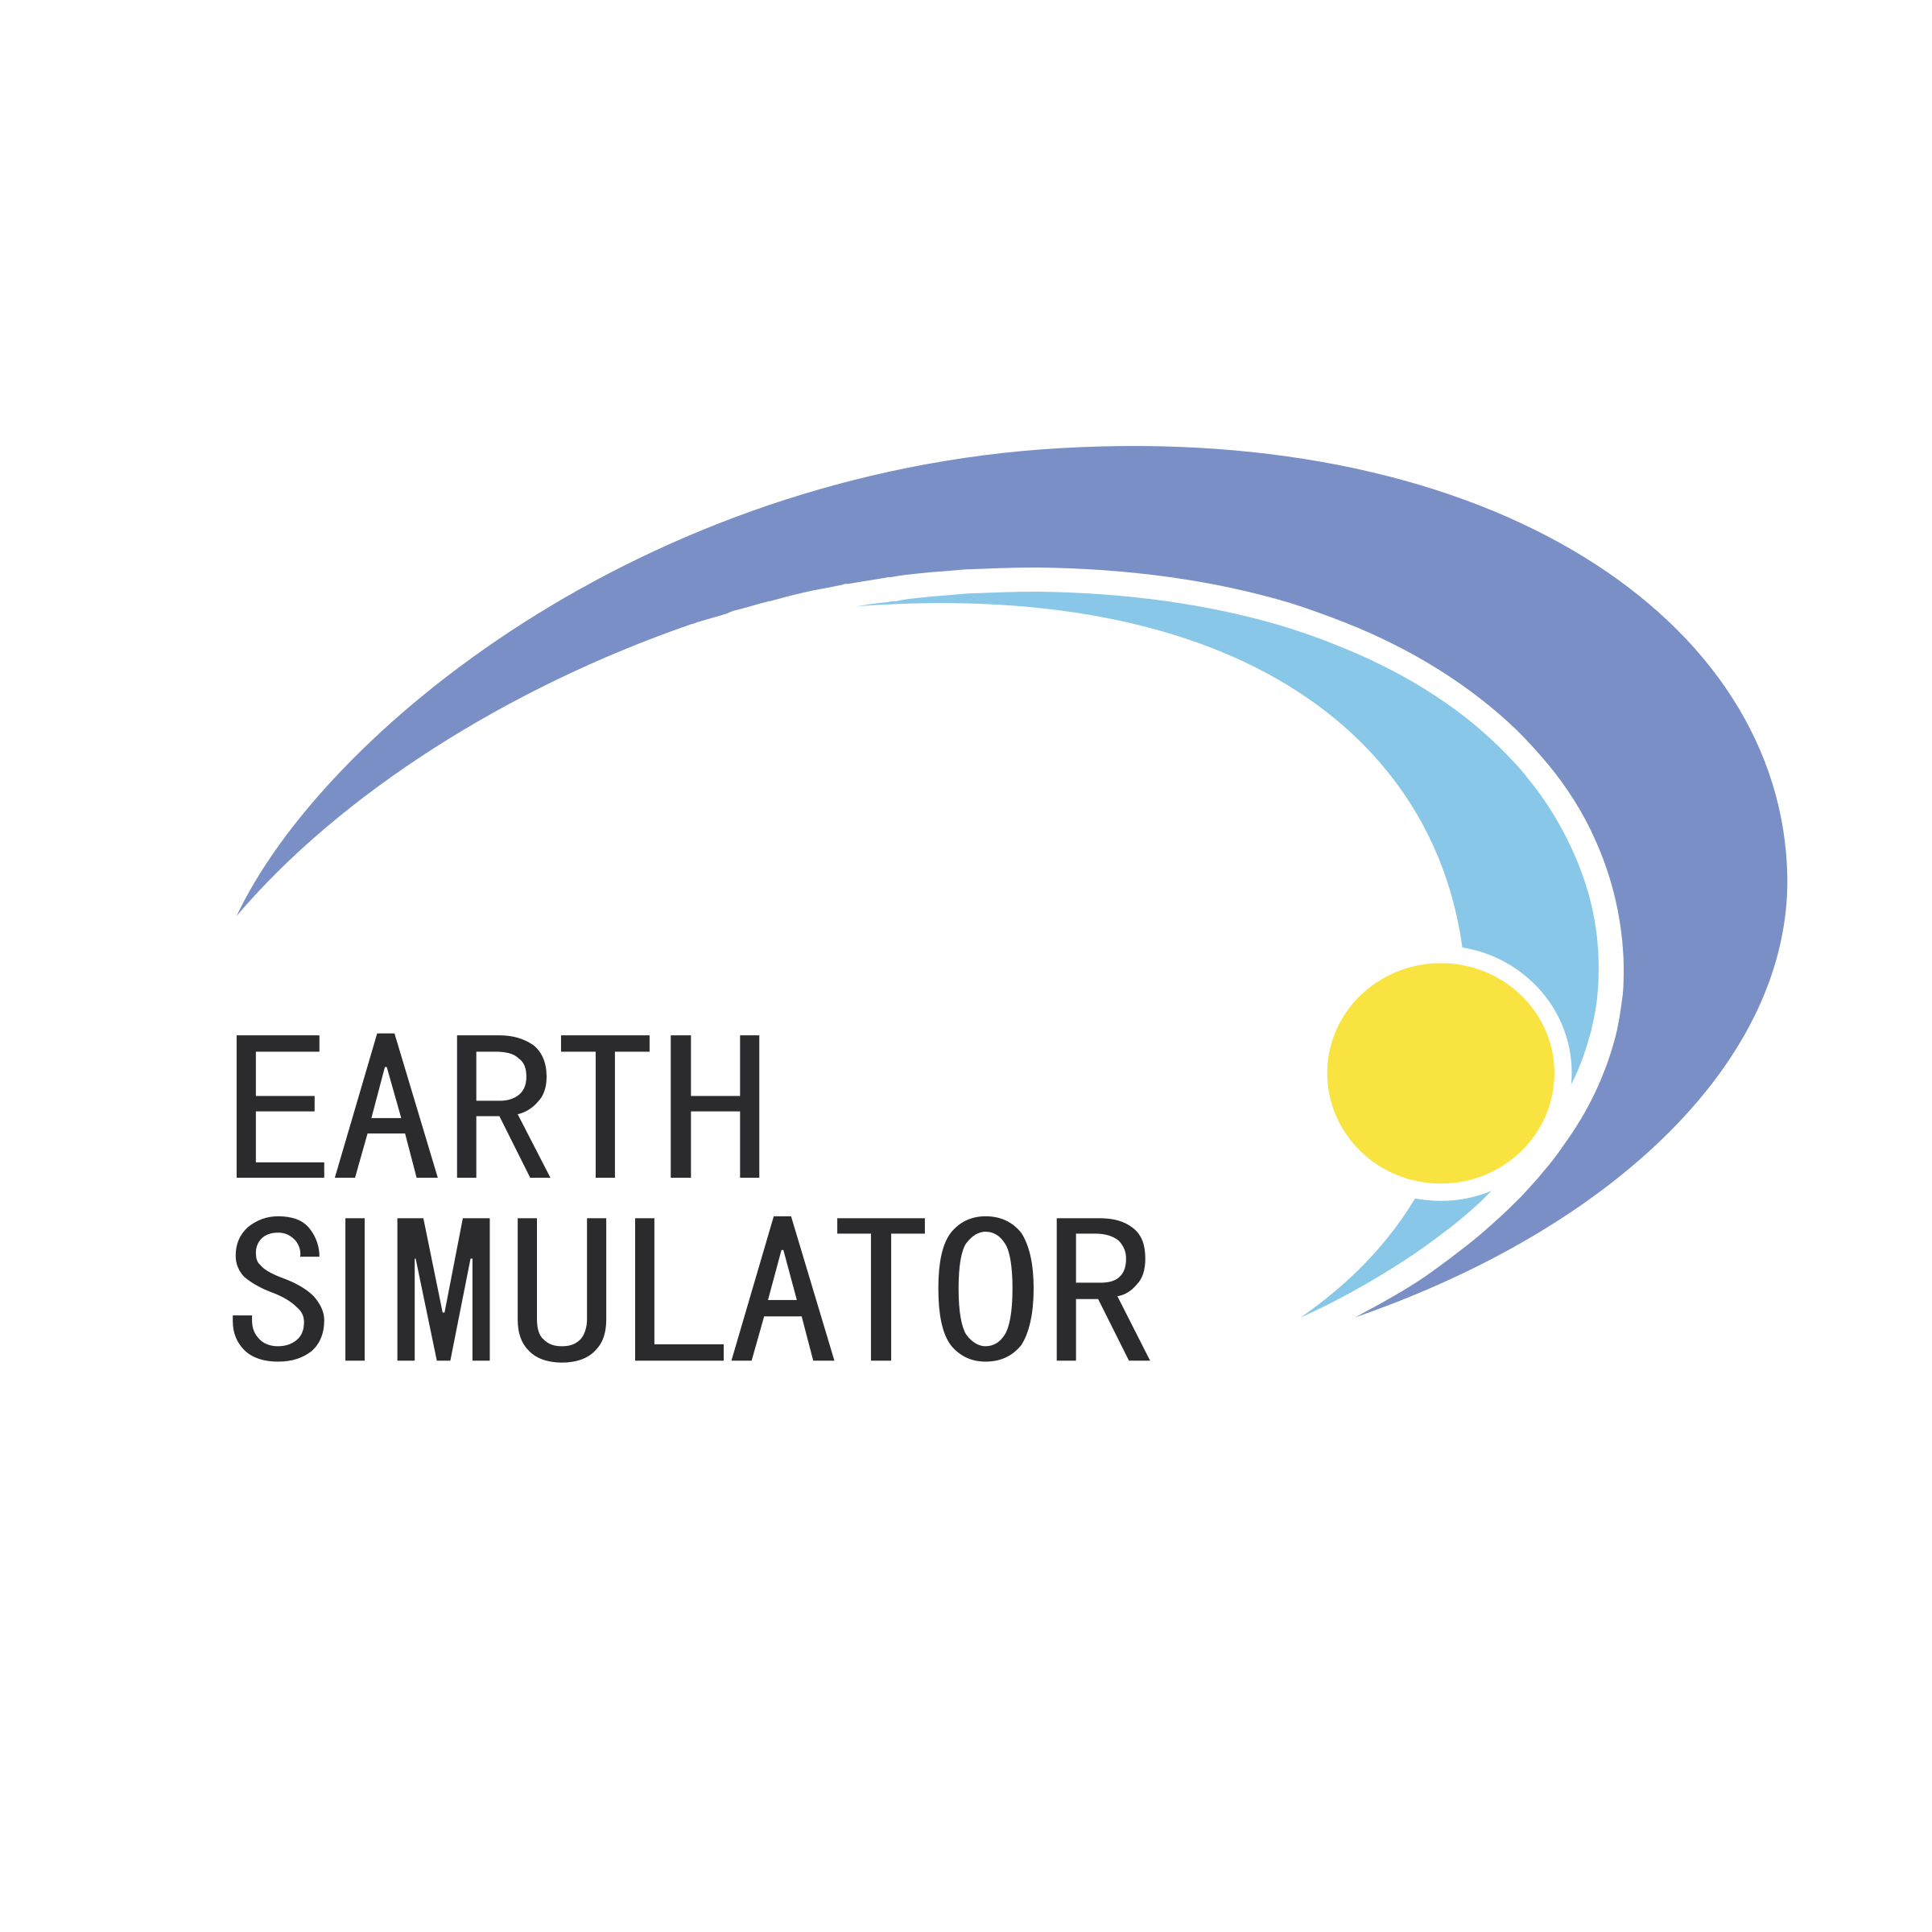 Simulator Logo - Earth Simulator Logo PNG Transparent & SVG Vector